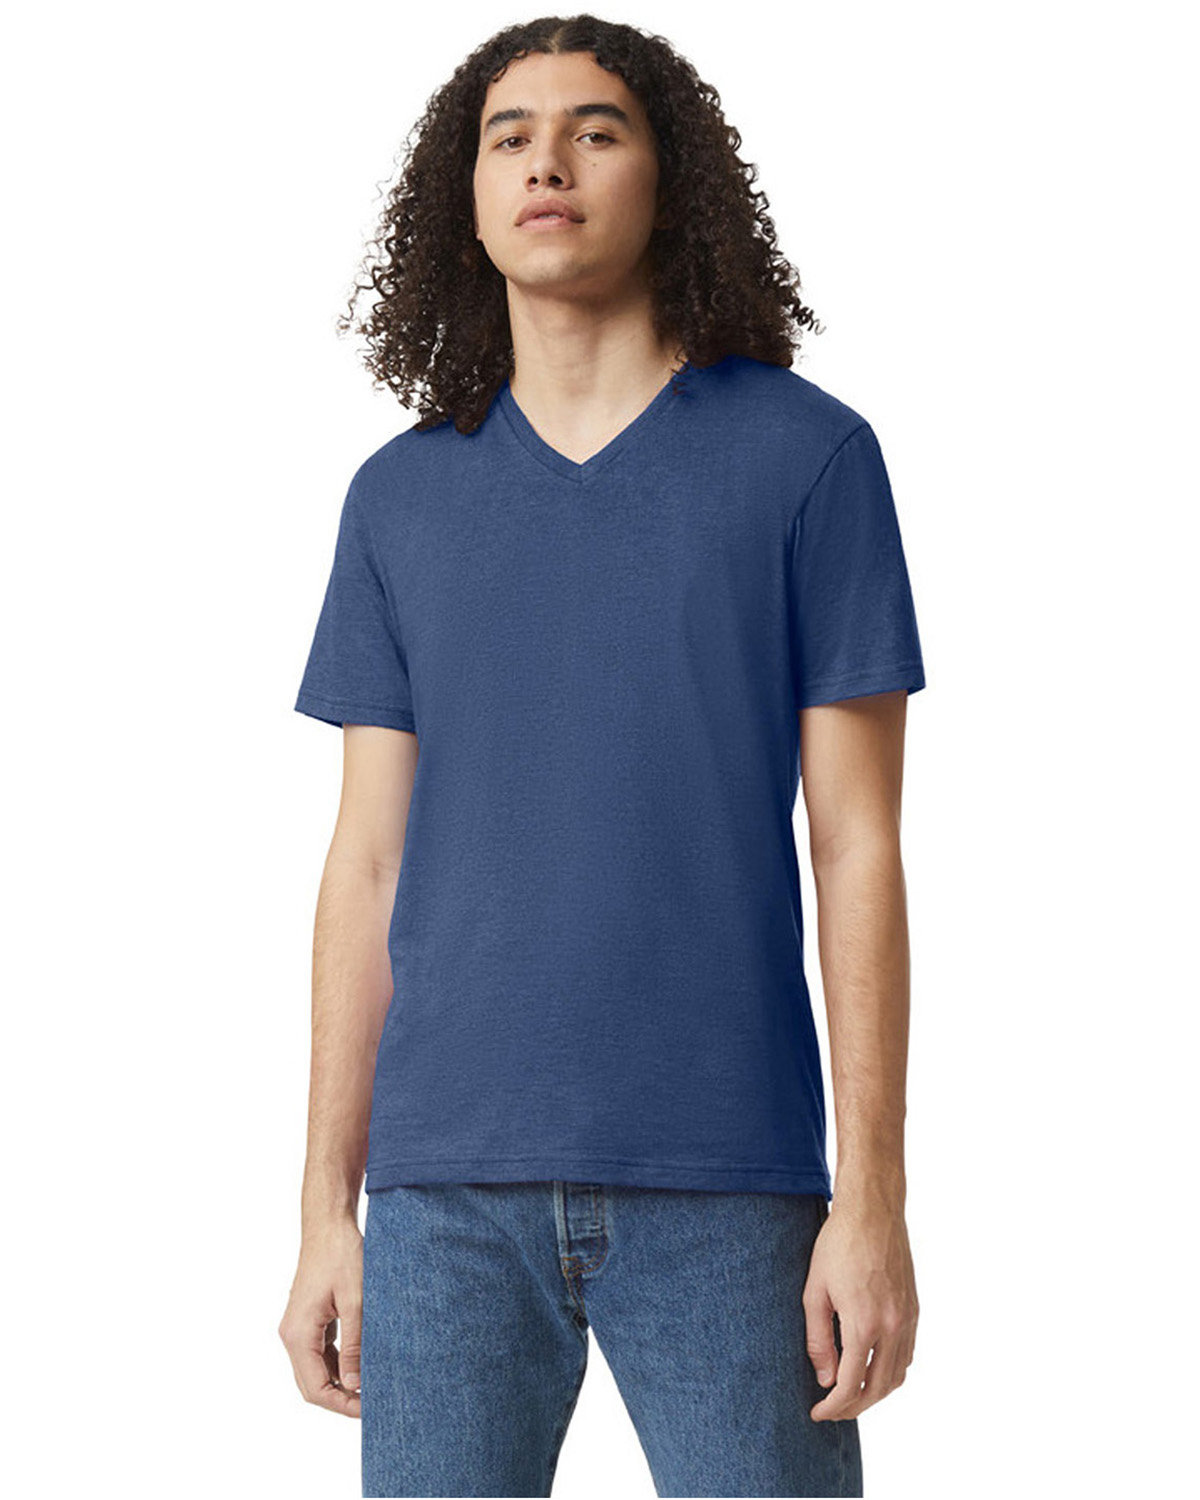 American Apparel Unisex CVC V-Neck T-Shirt HEATHER ARCTIC 